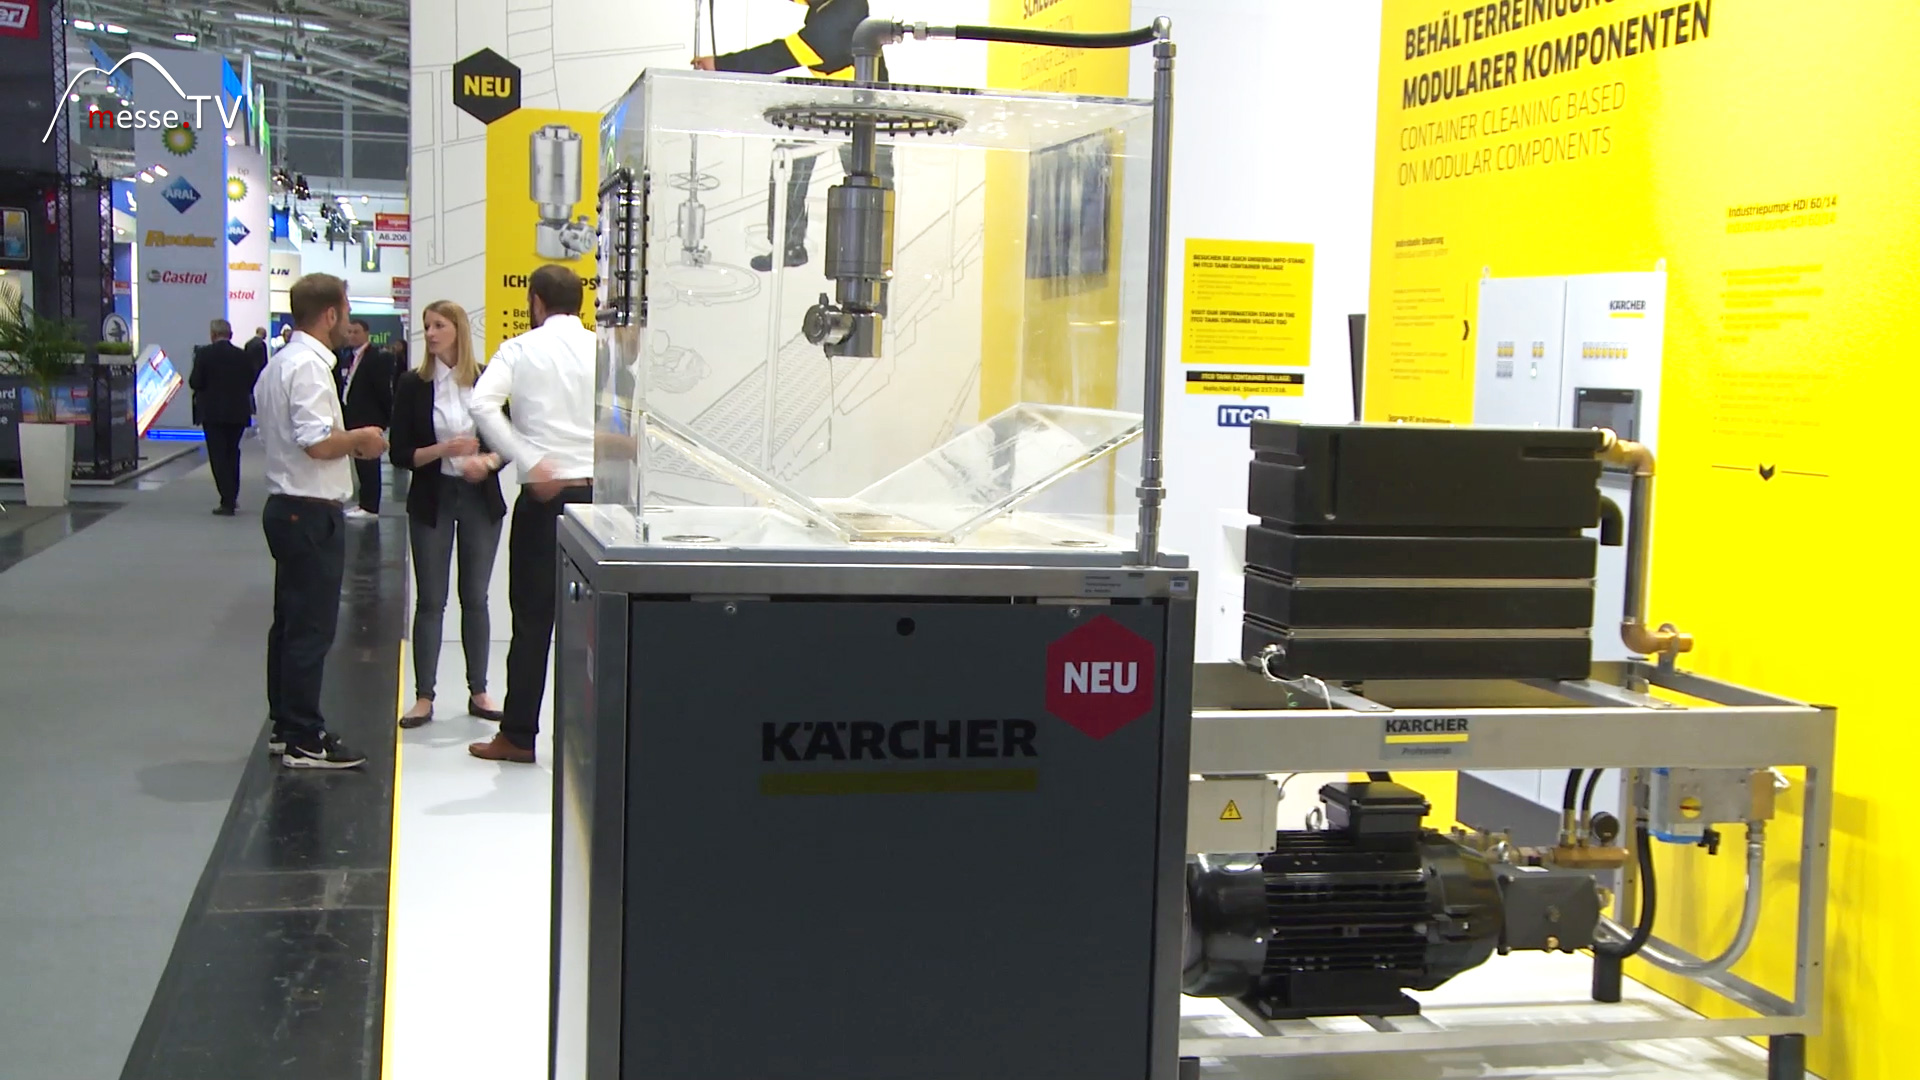 Kaercher new system inside tank cleaning